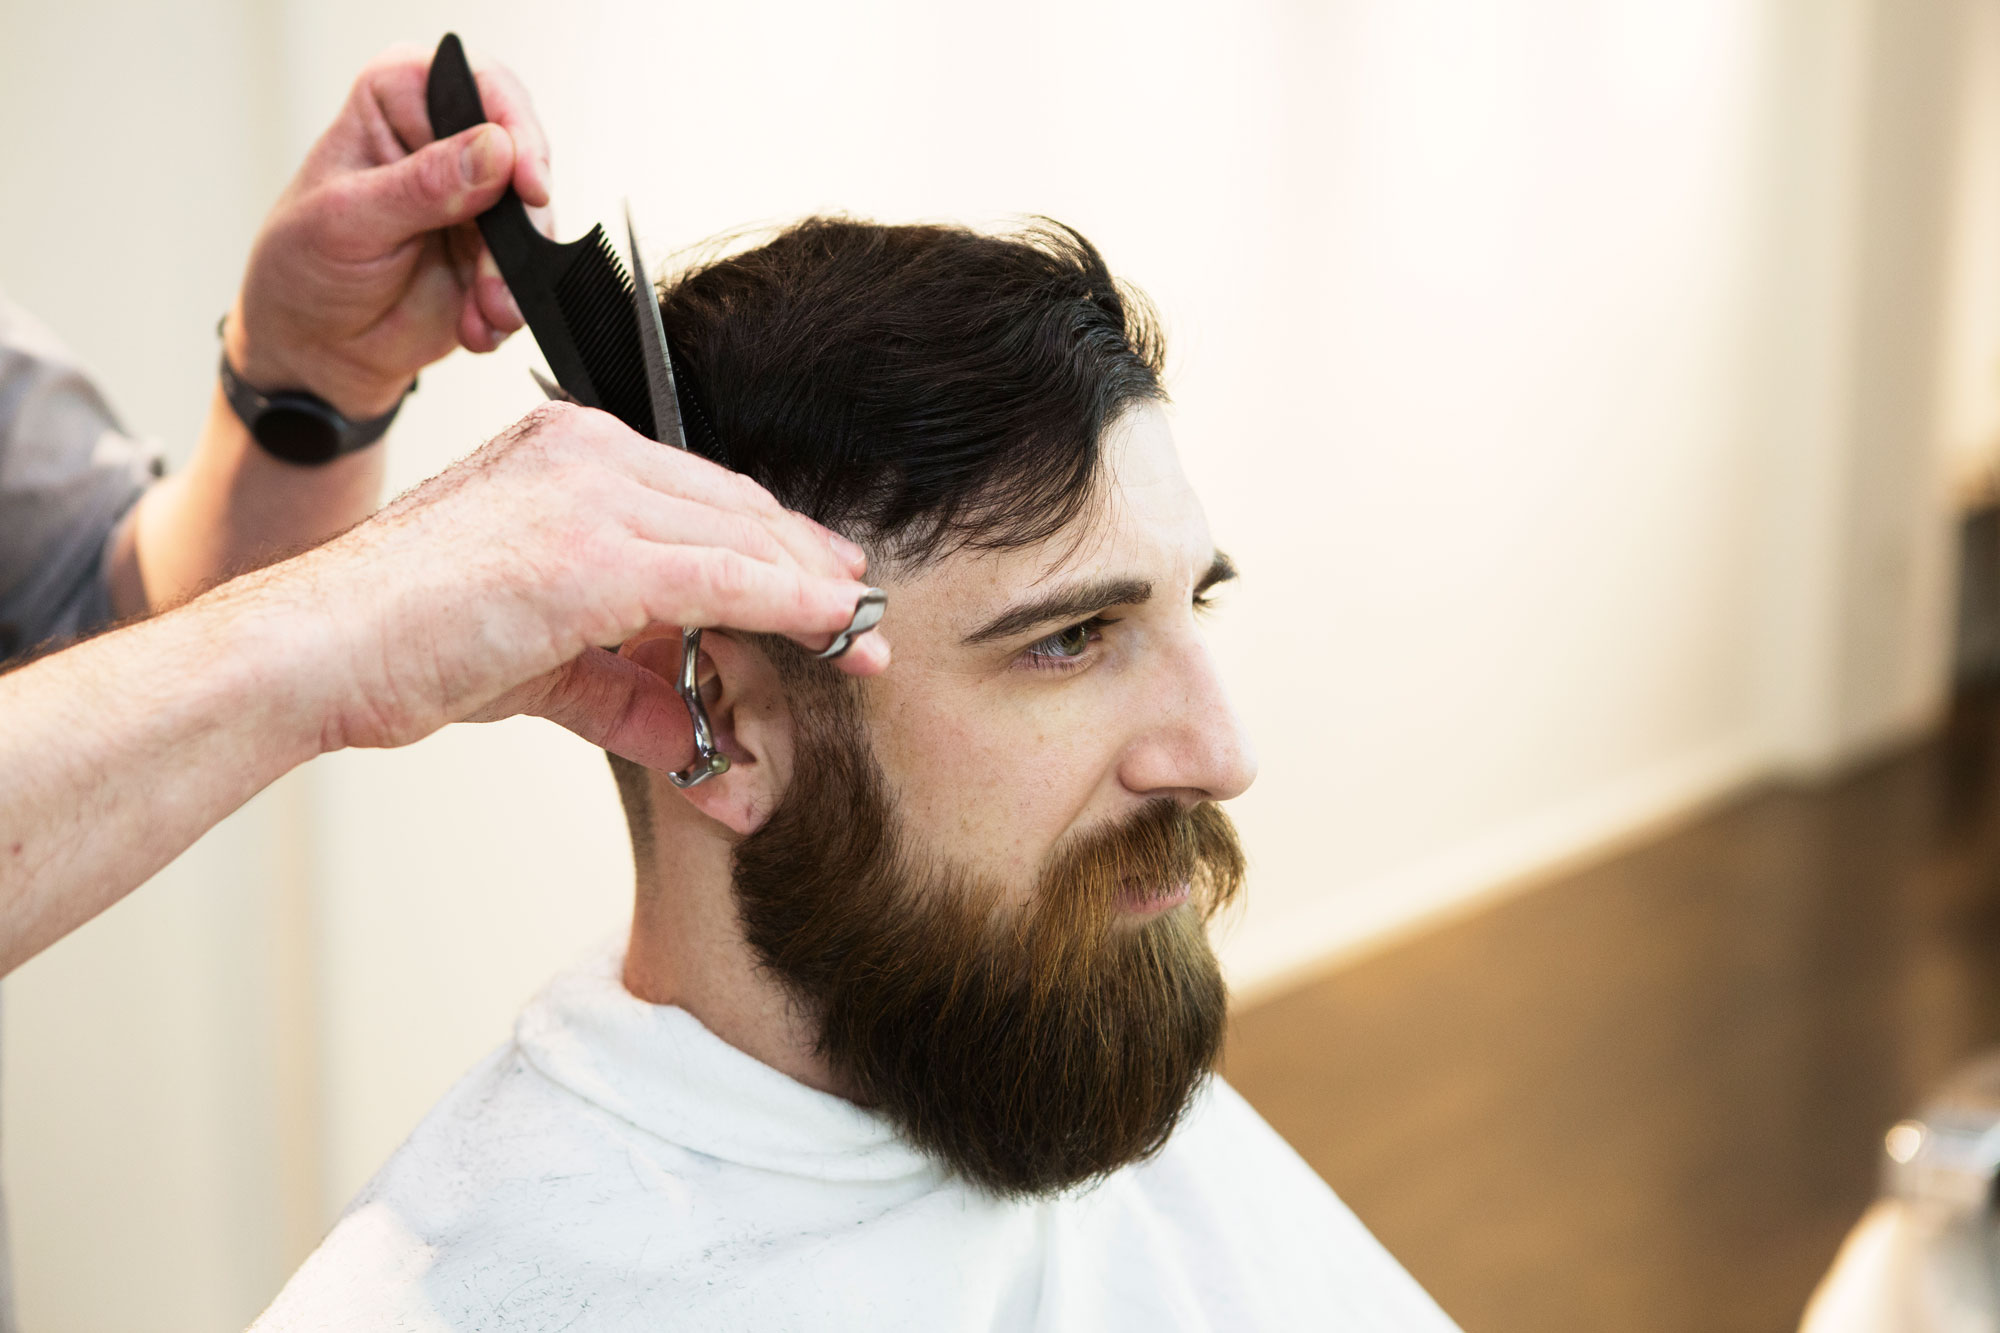 The Haircut & Beard Trim Combo is a Customer Favorite